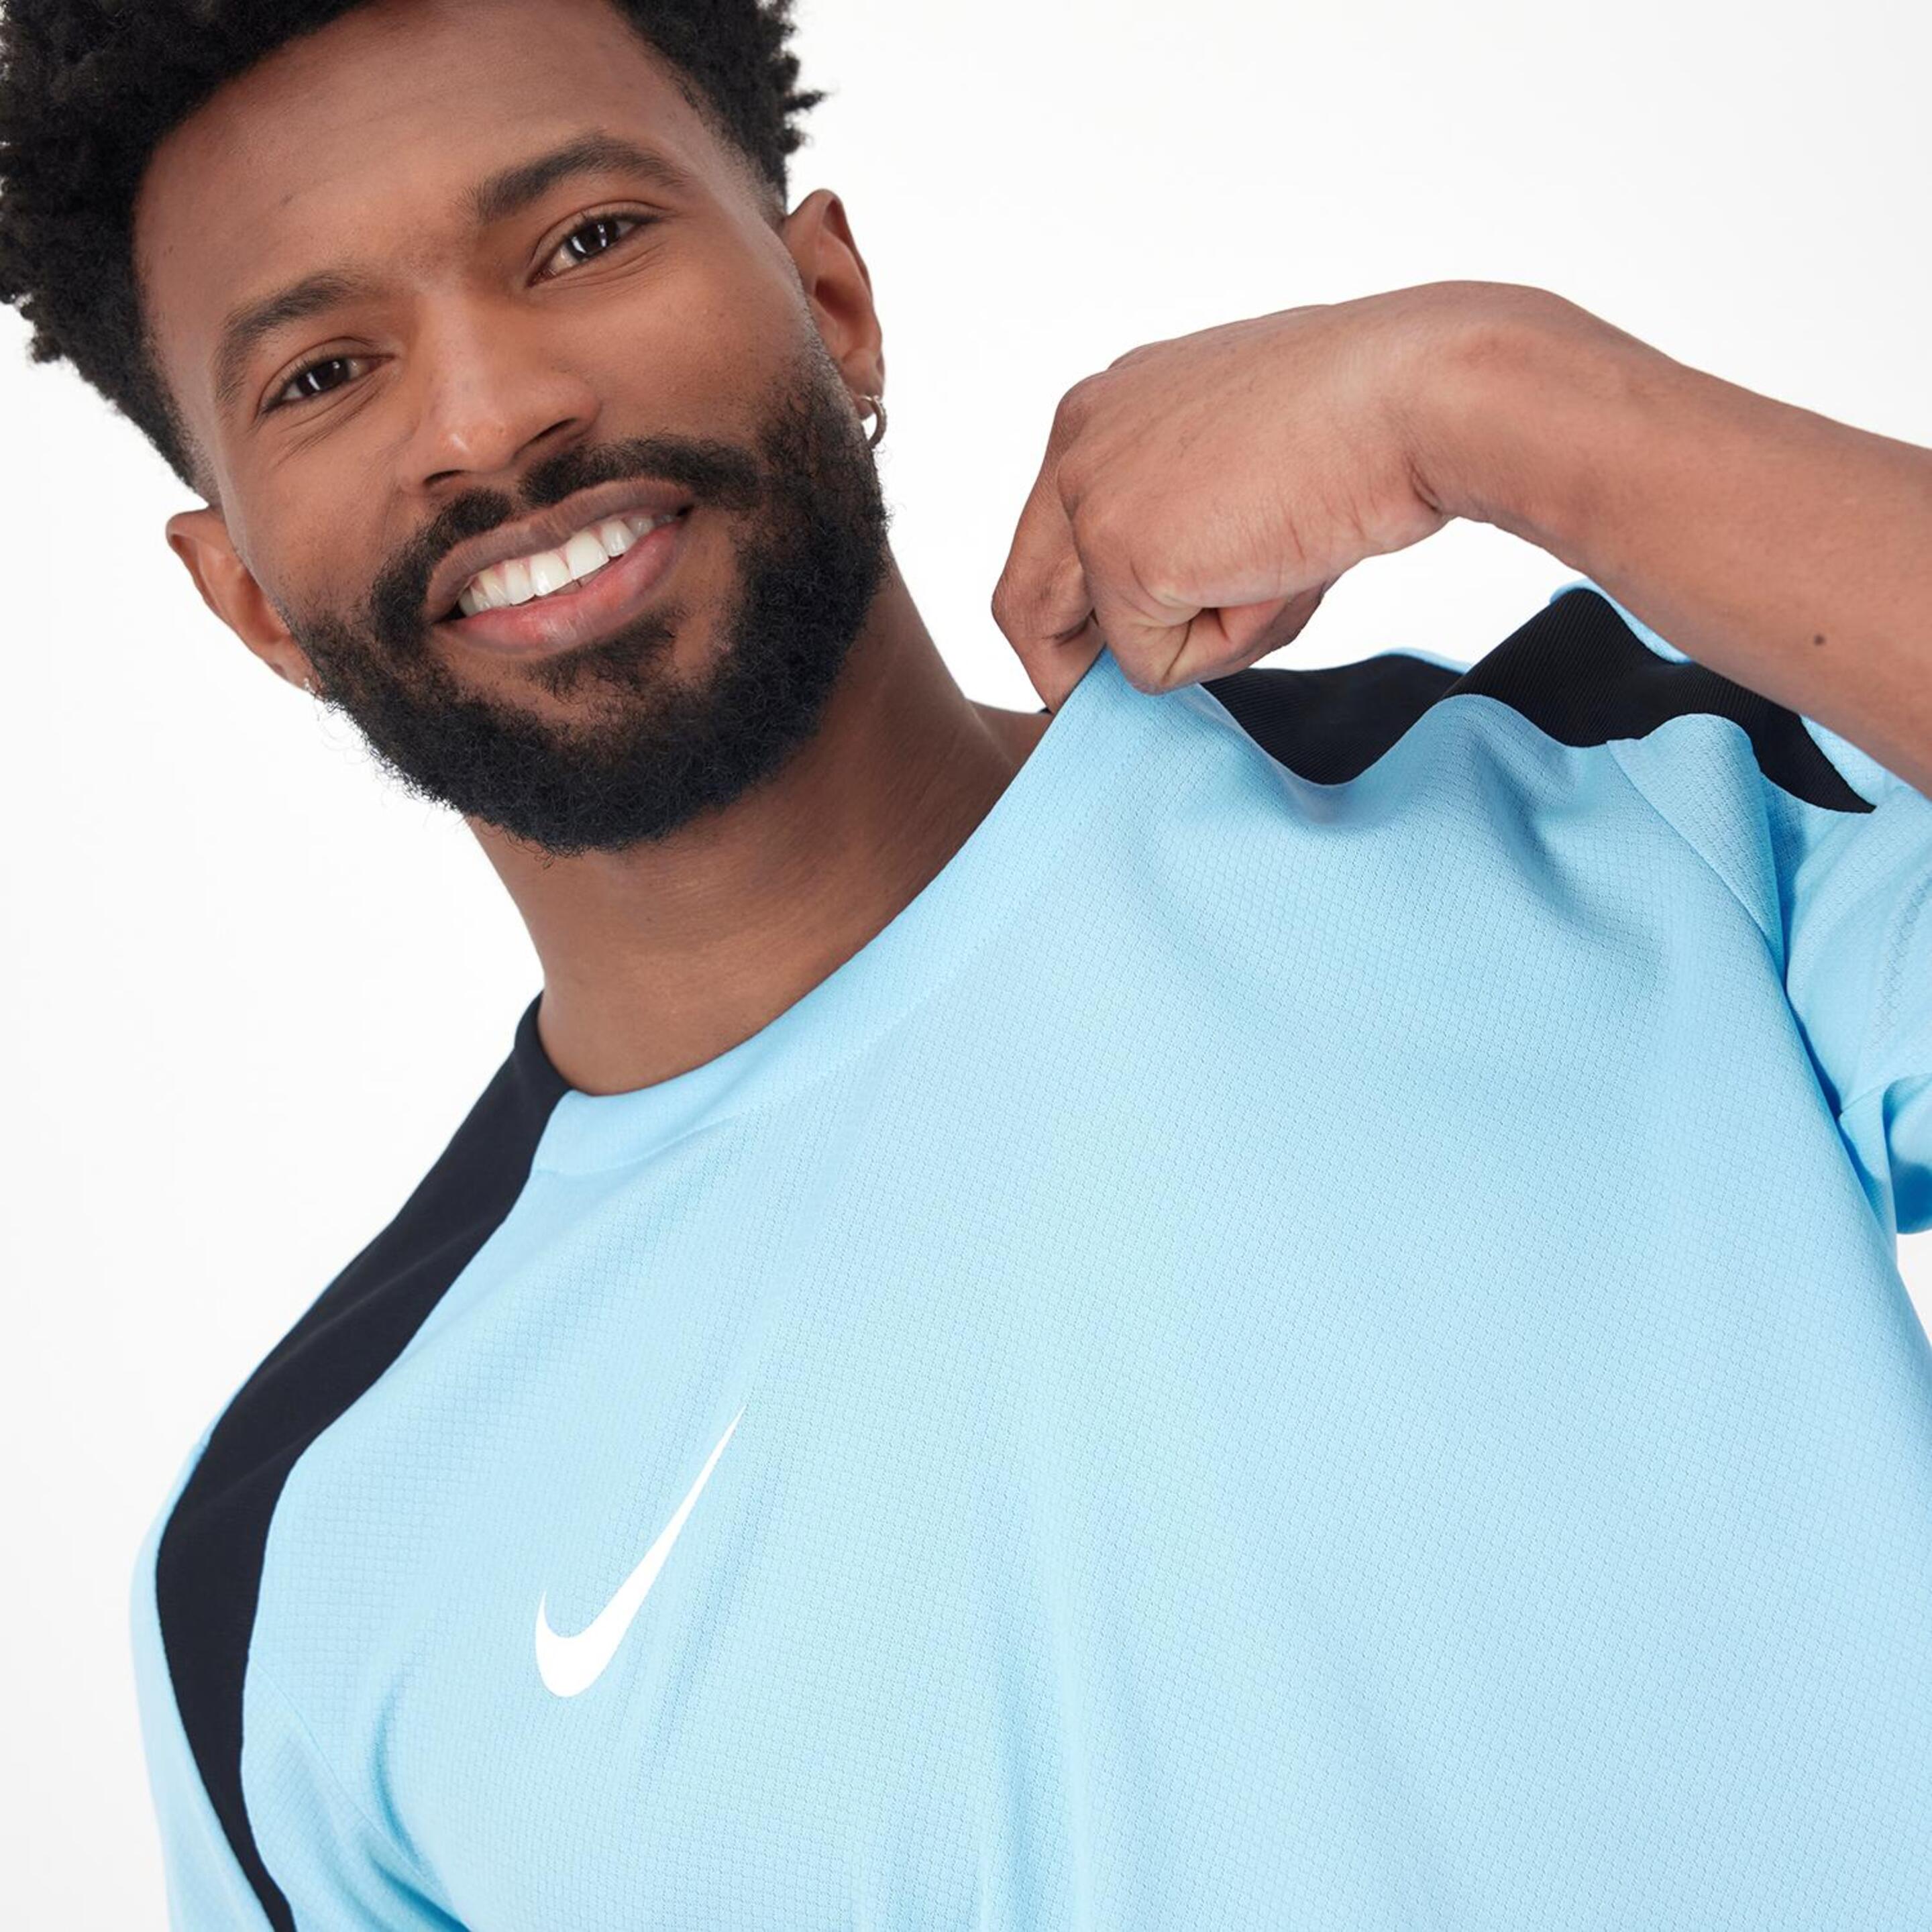 Nike Strike - Azul - Camiseta Fútbol Hombre